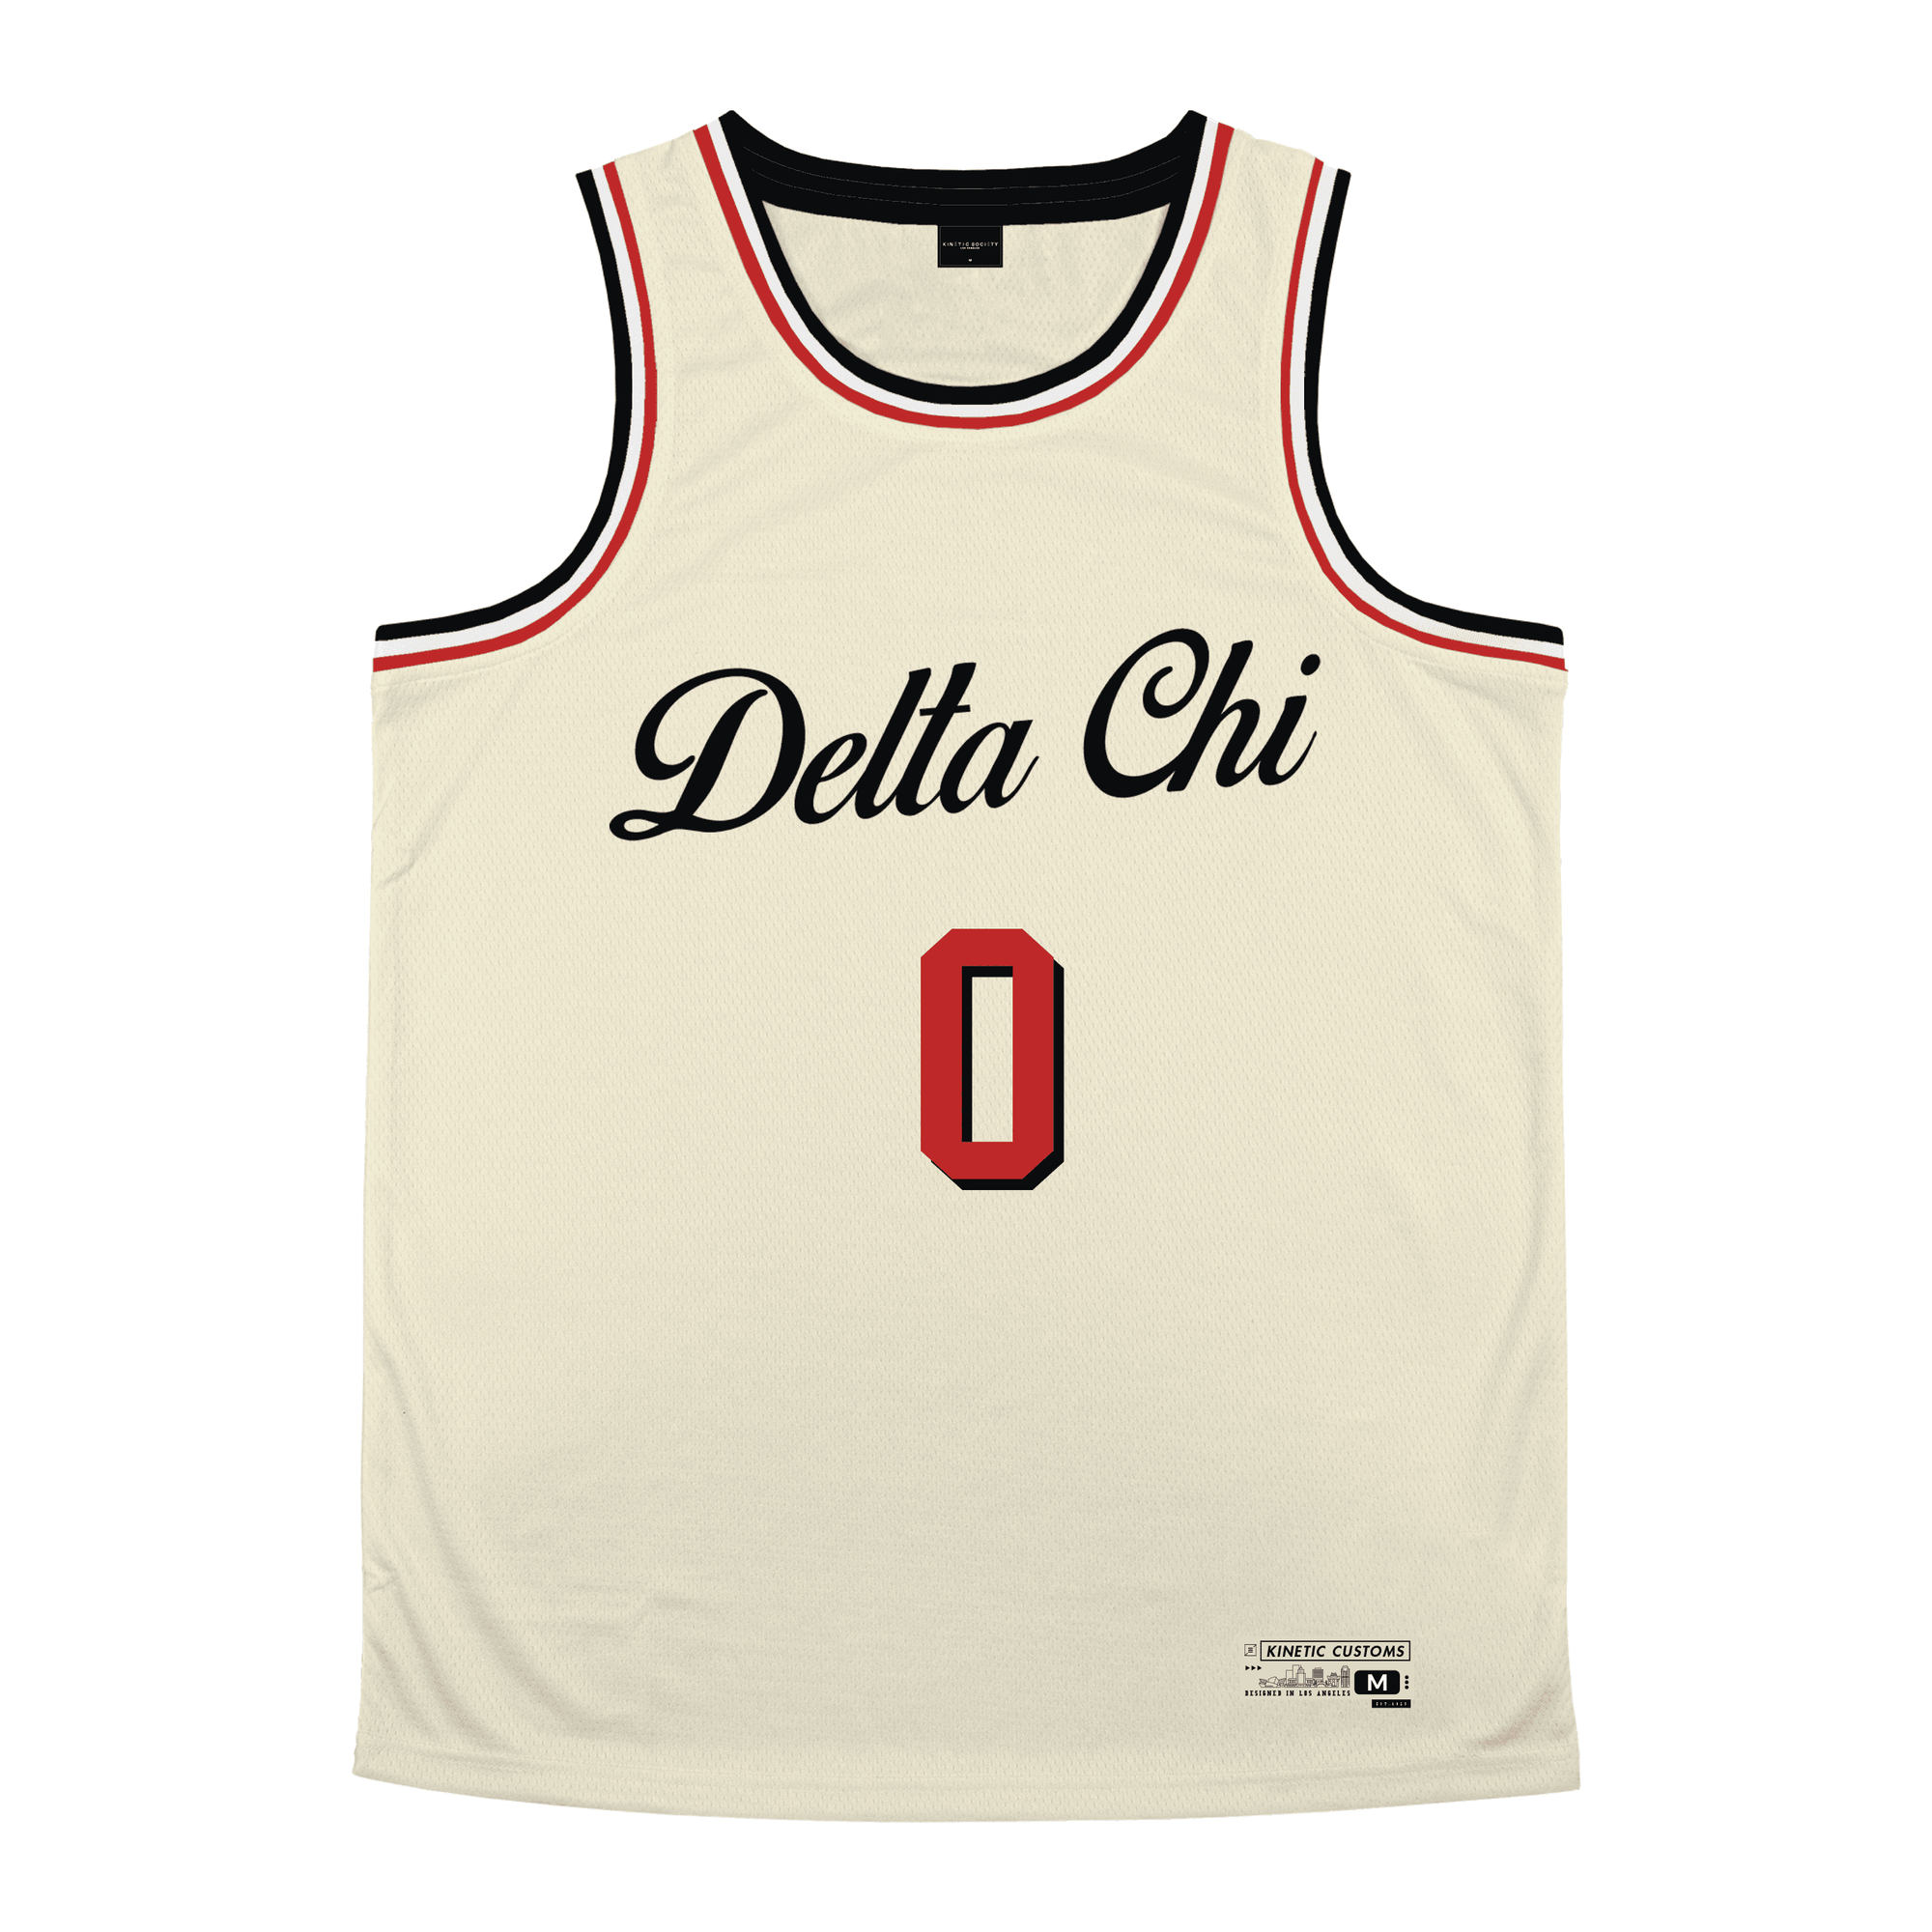 Delta Chi - VIntage Cream Basketball Jersey